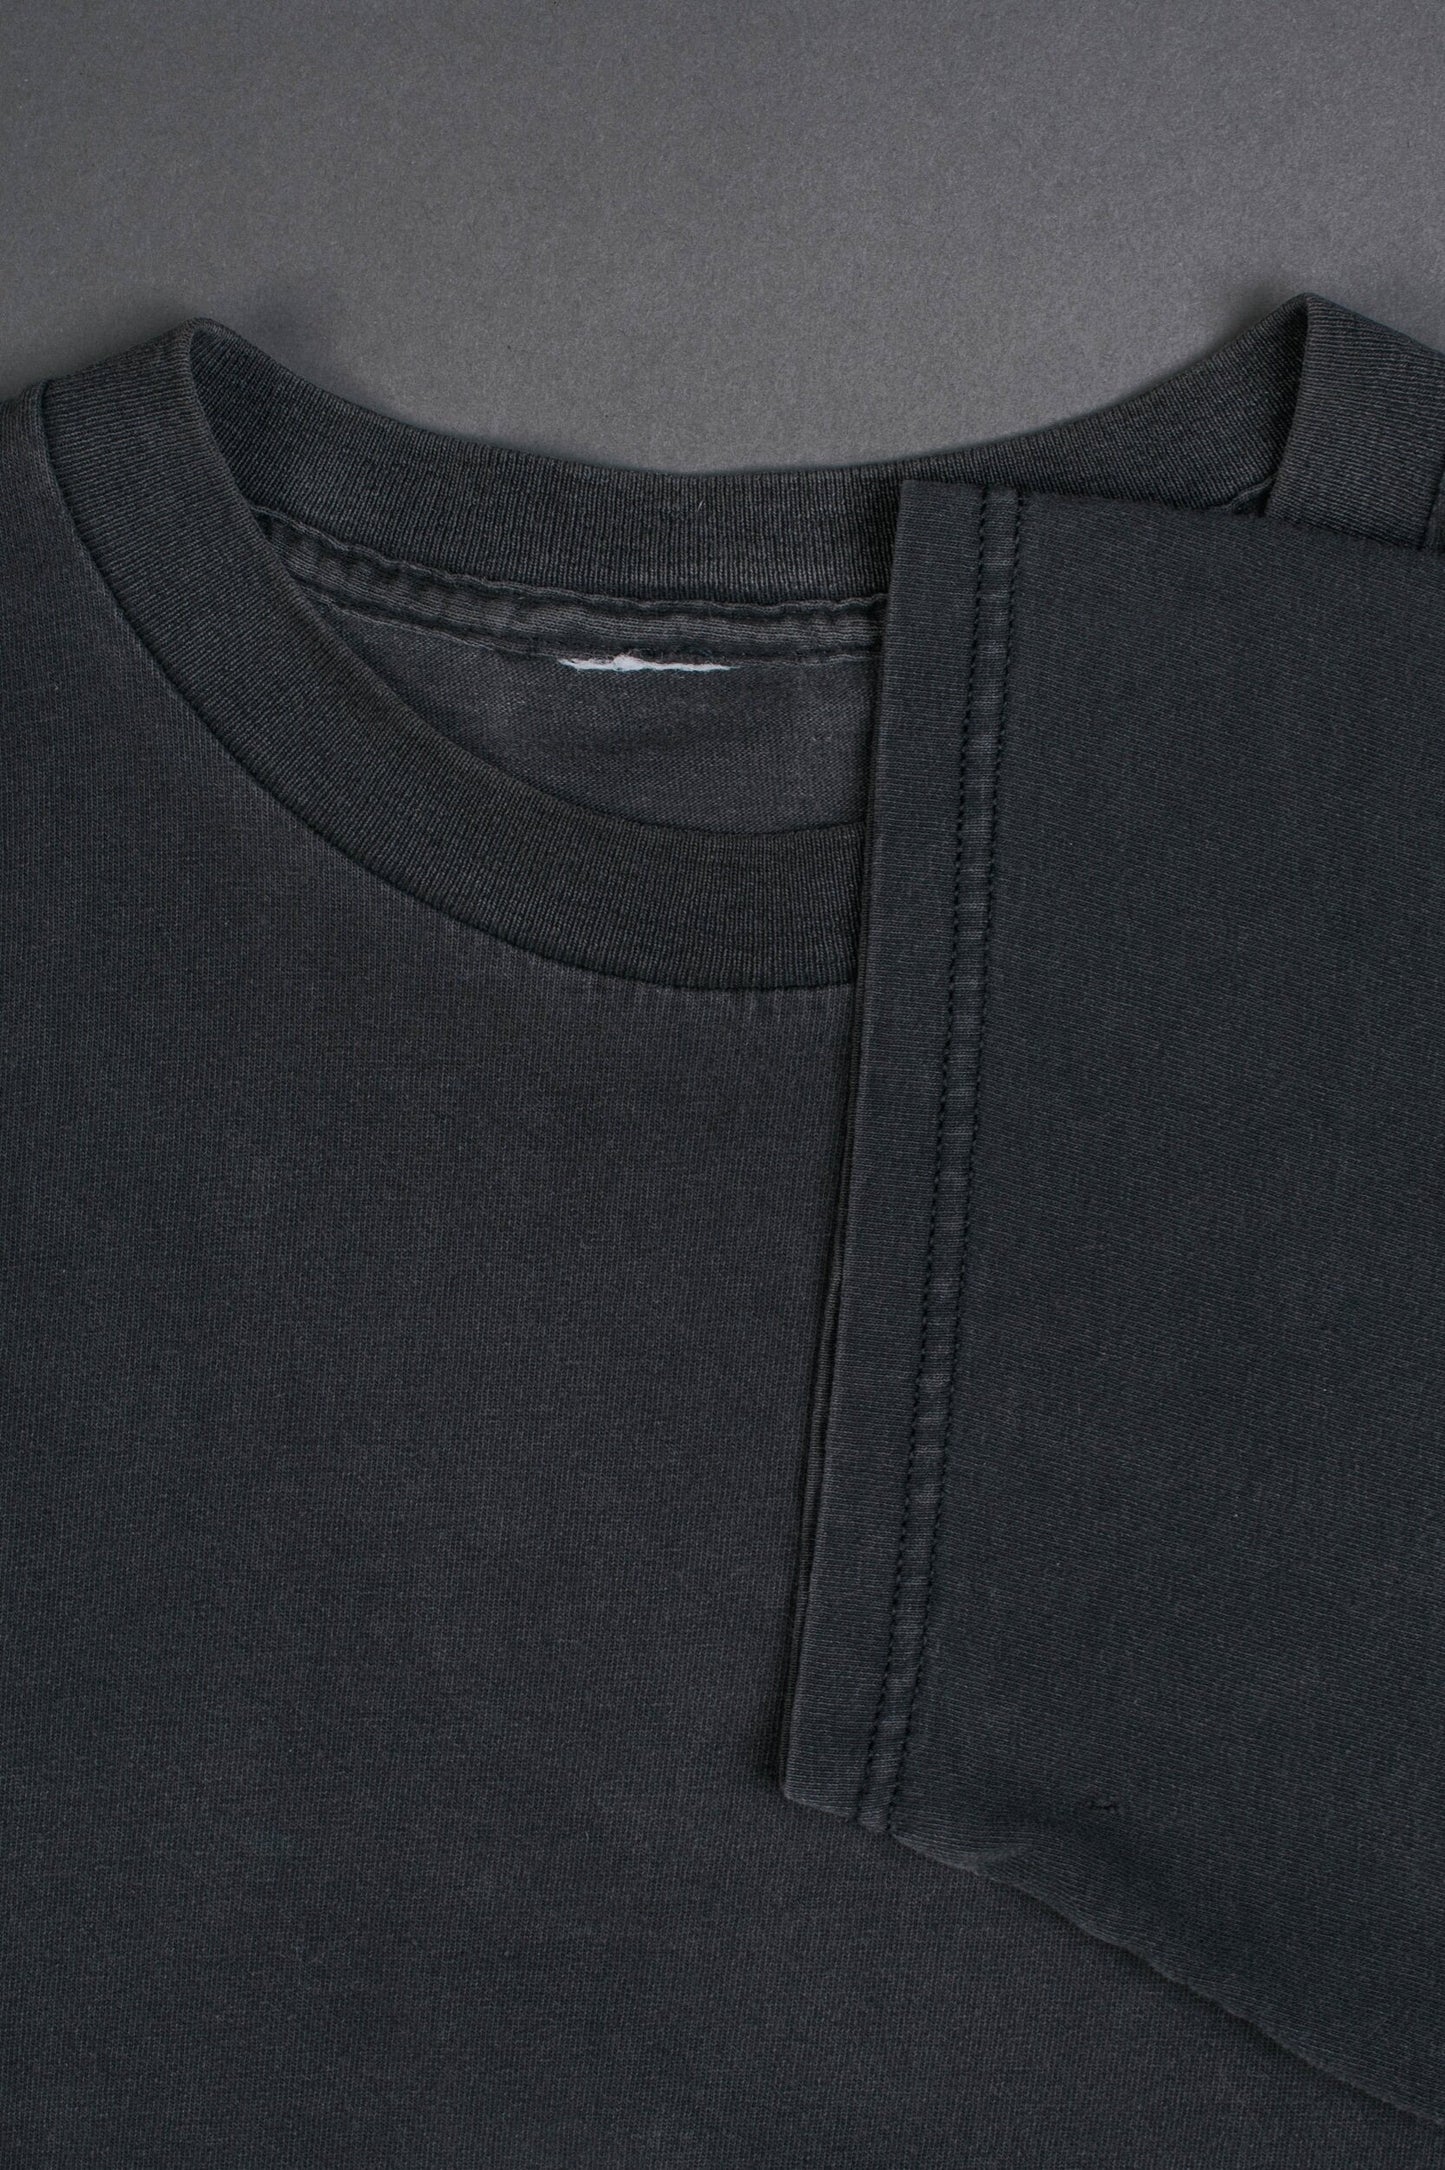 Vintage 1996 Fiona Apple Tidal T-Shirt